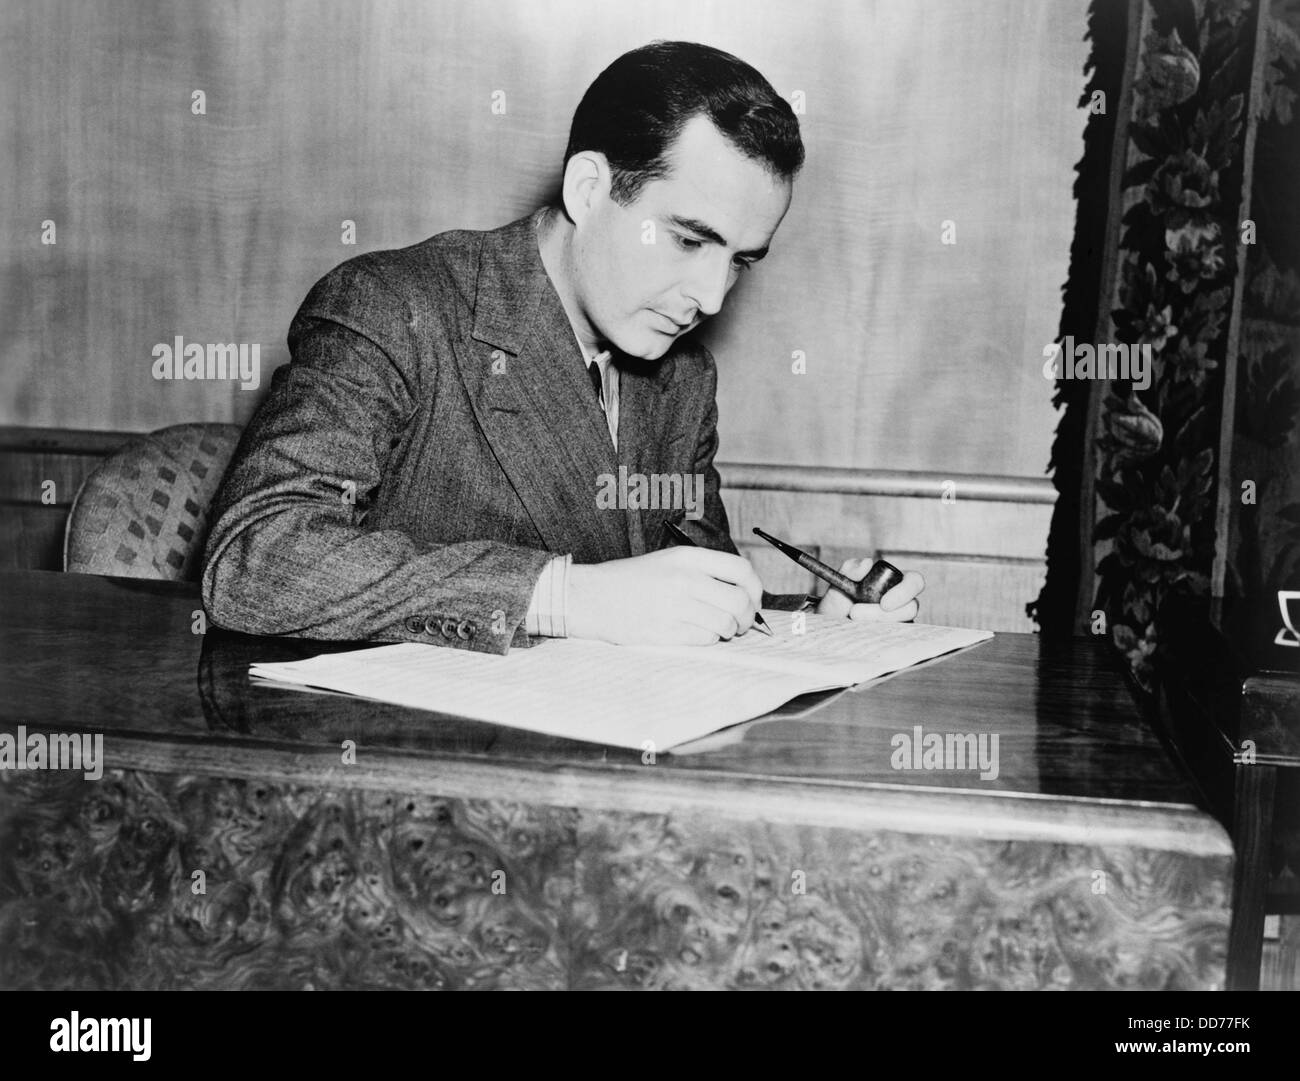 Samuel Barber, compositor americano de orquestal, coral, ópera y música de piano. Oct 26, 1938. (BSLOC 2013 9 15) Foto de stock